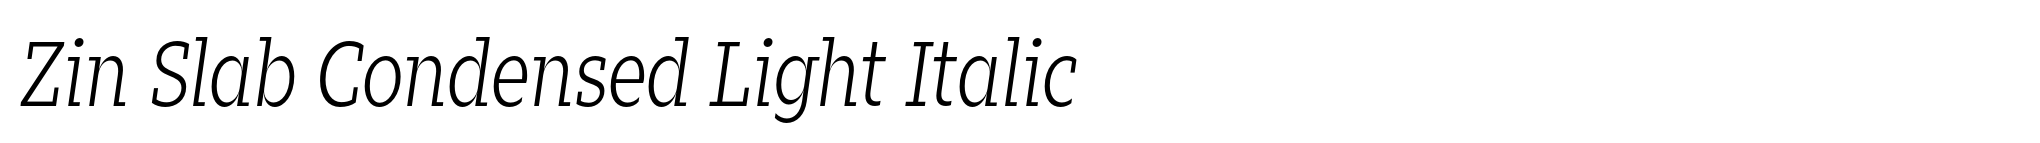 Zin Slab Condensed Light Italic image